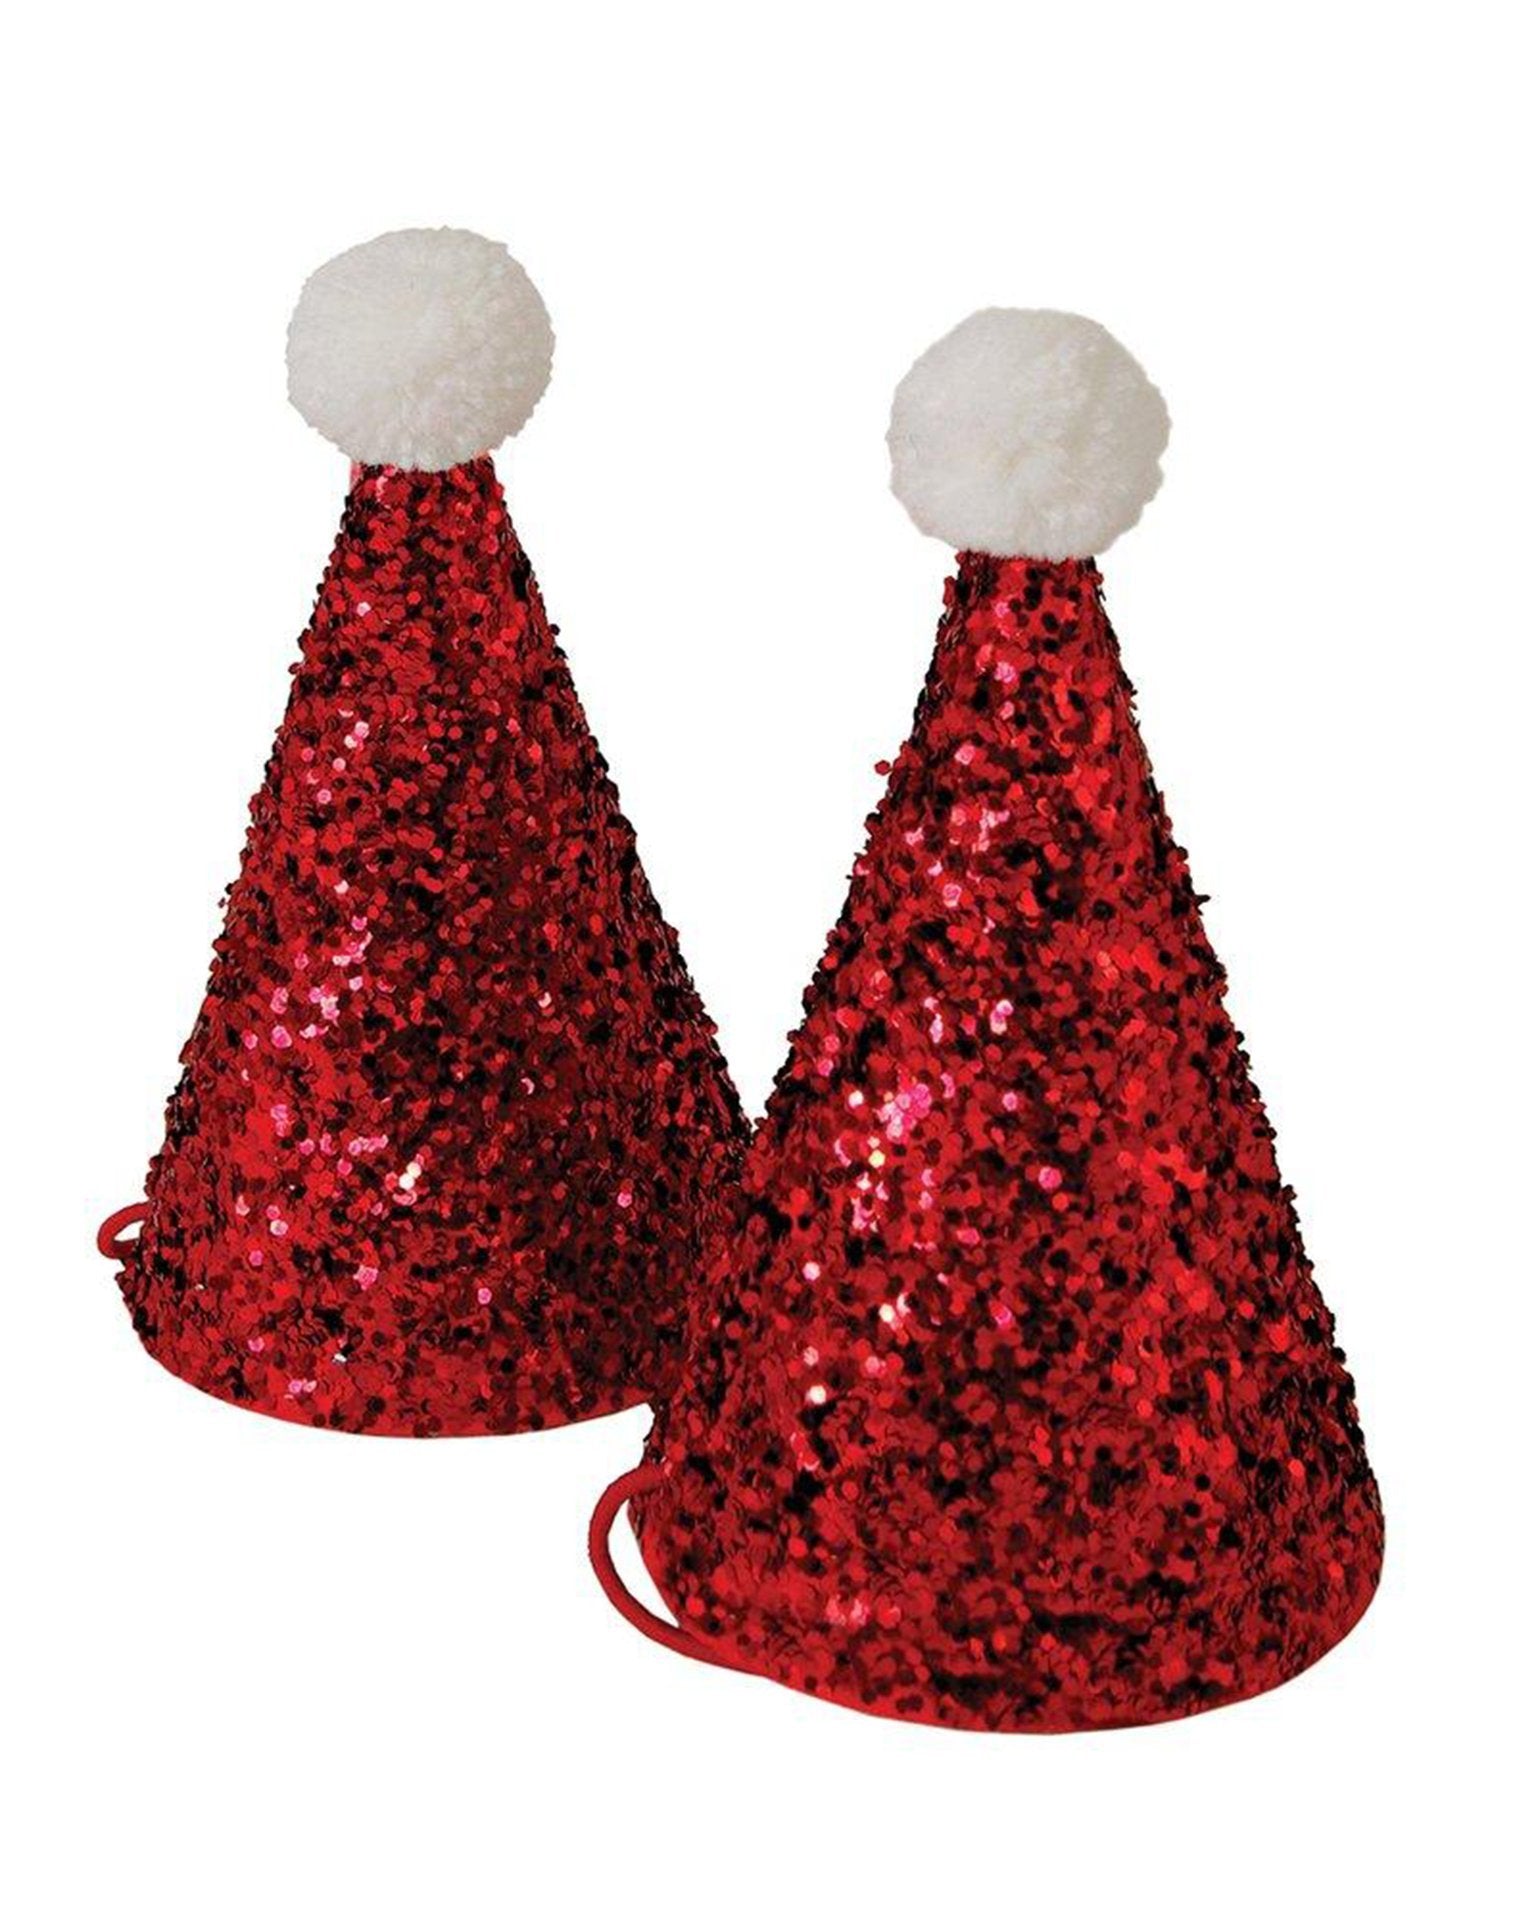 Little meri meri paper+party mini santa party hats